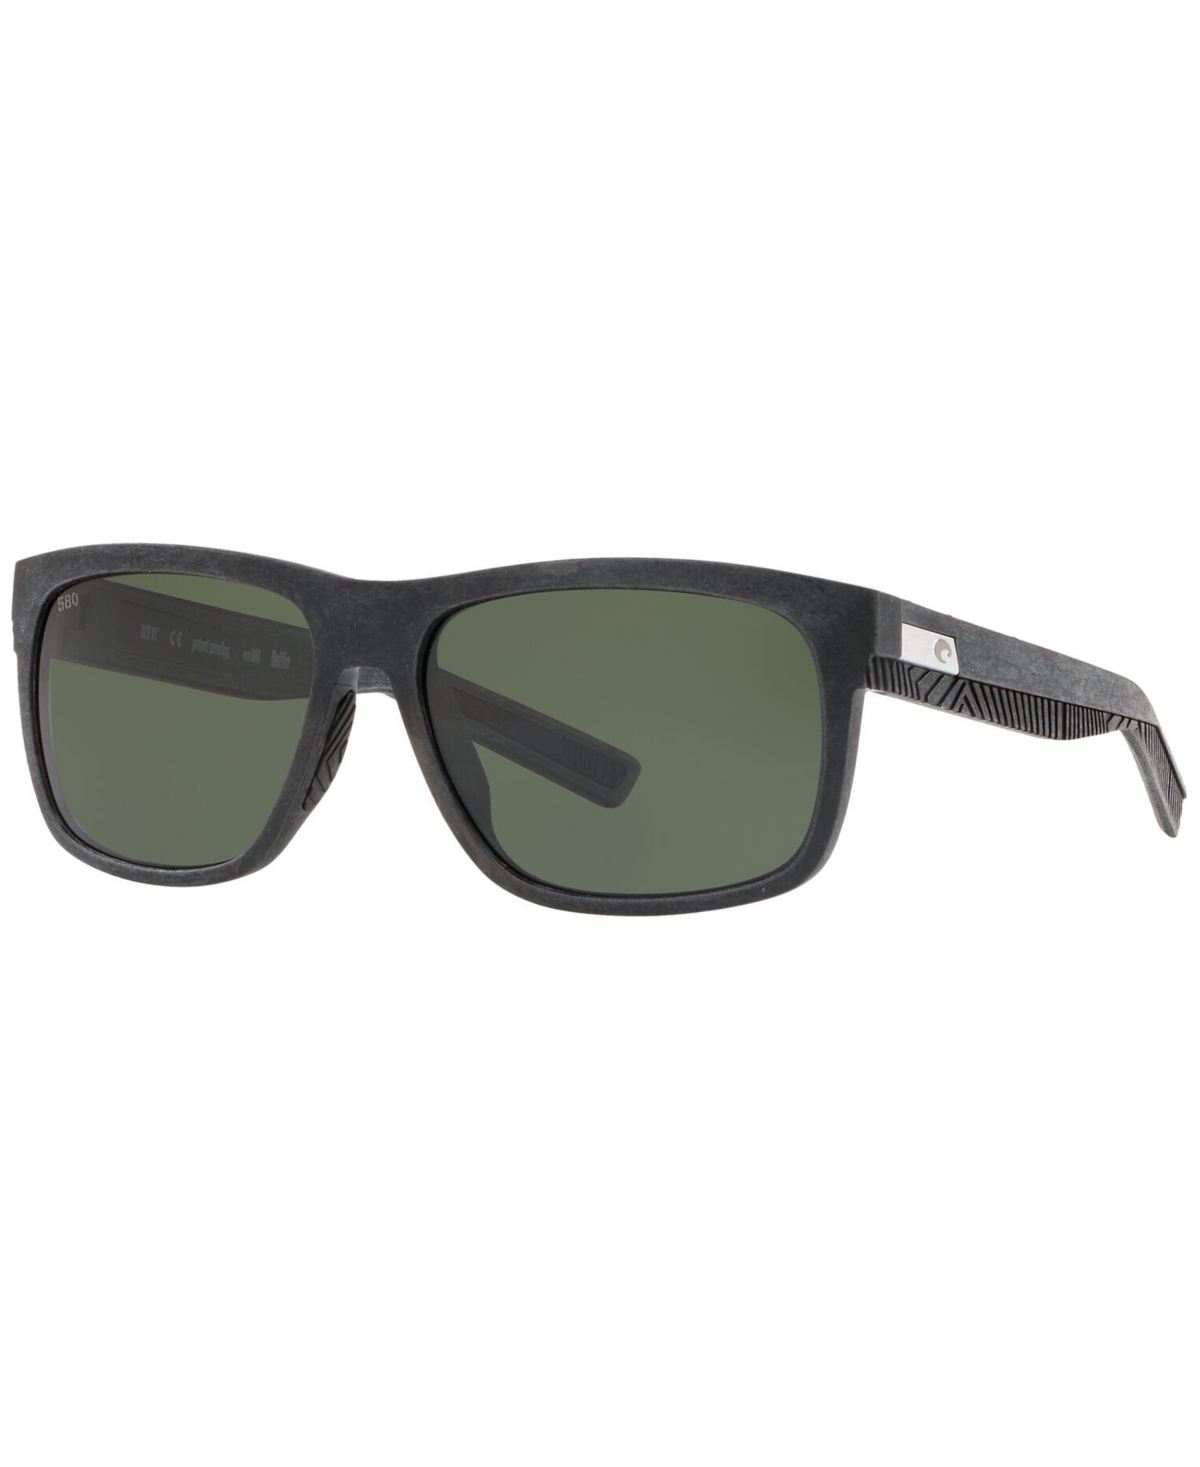 Men's Polarized Sunglasses - BLACK/GREY